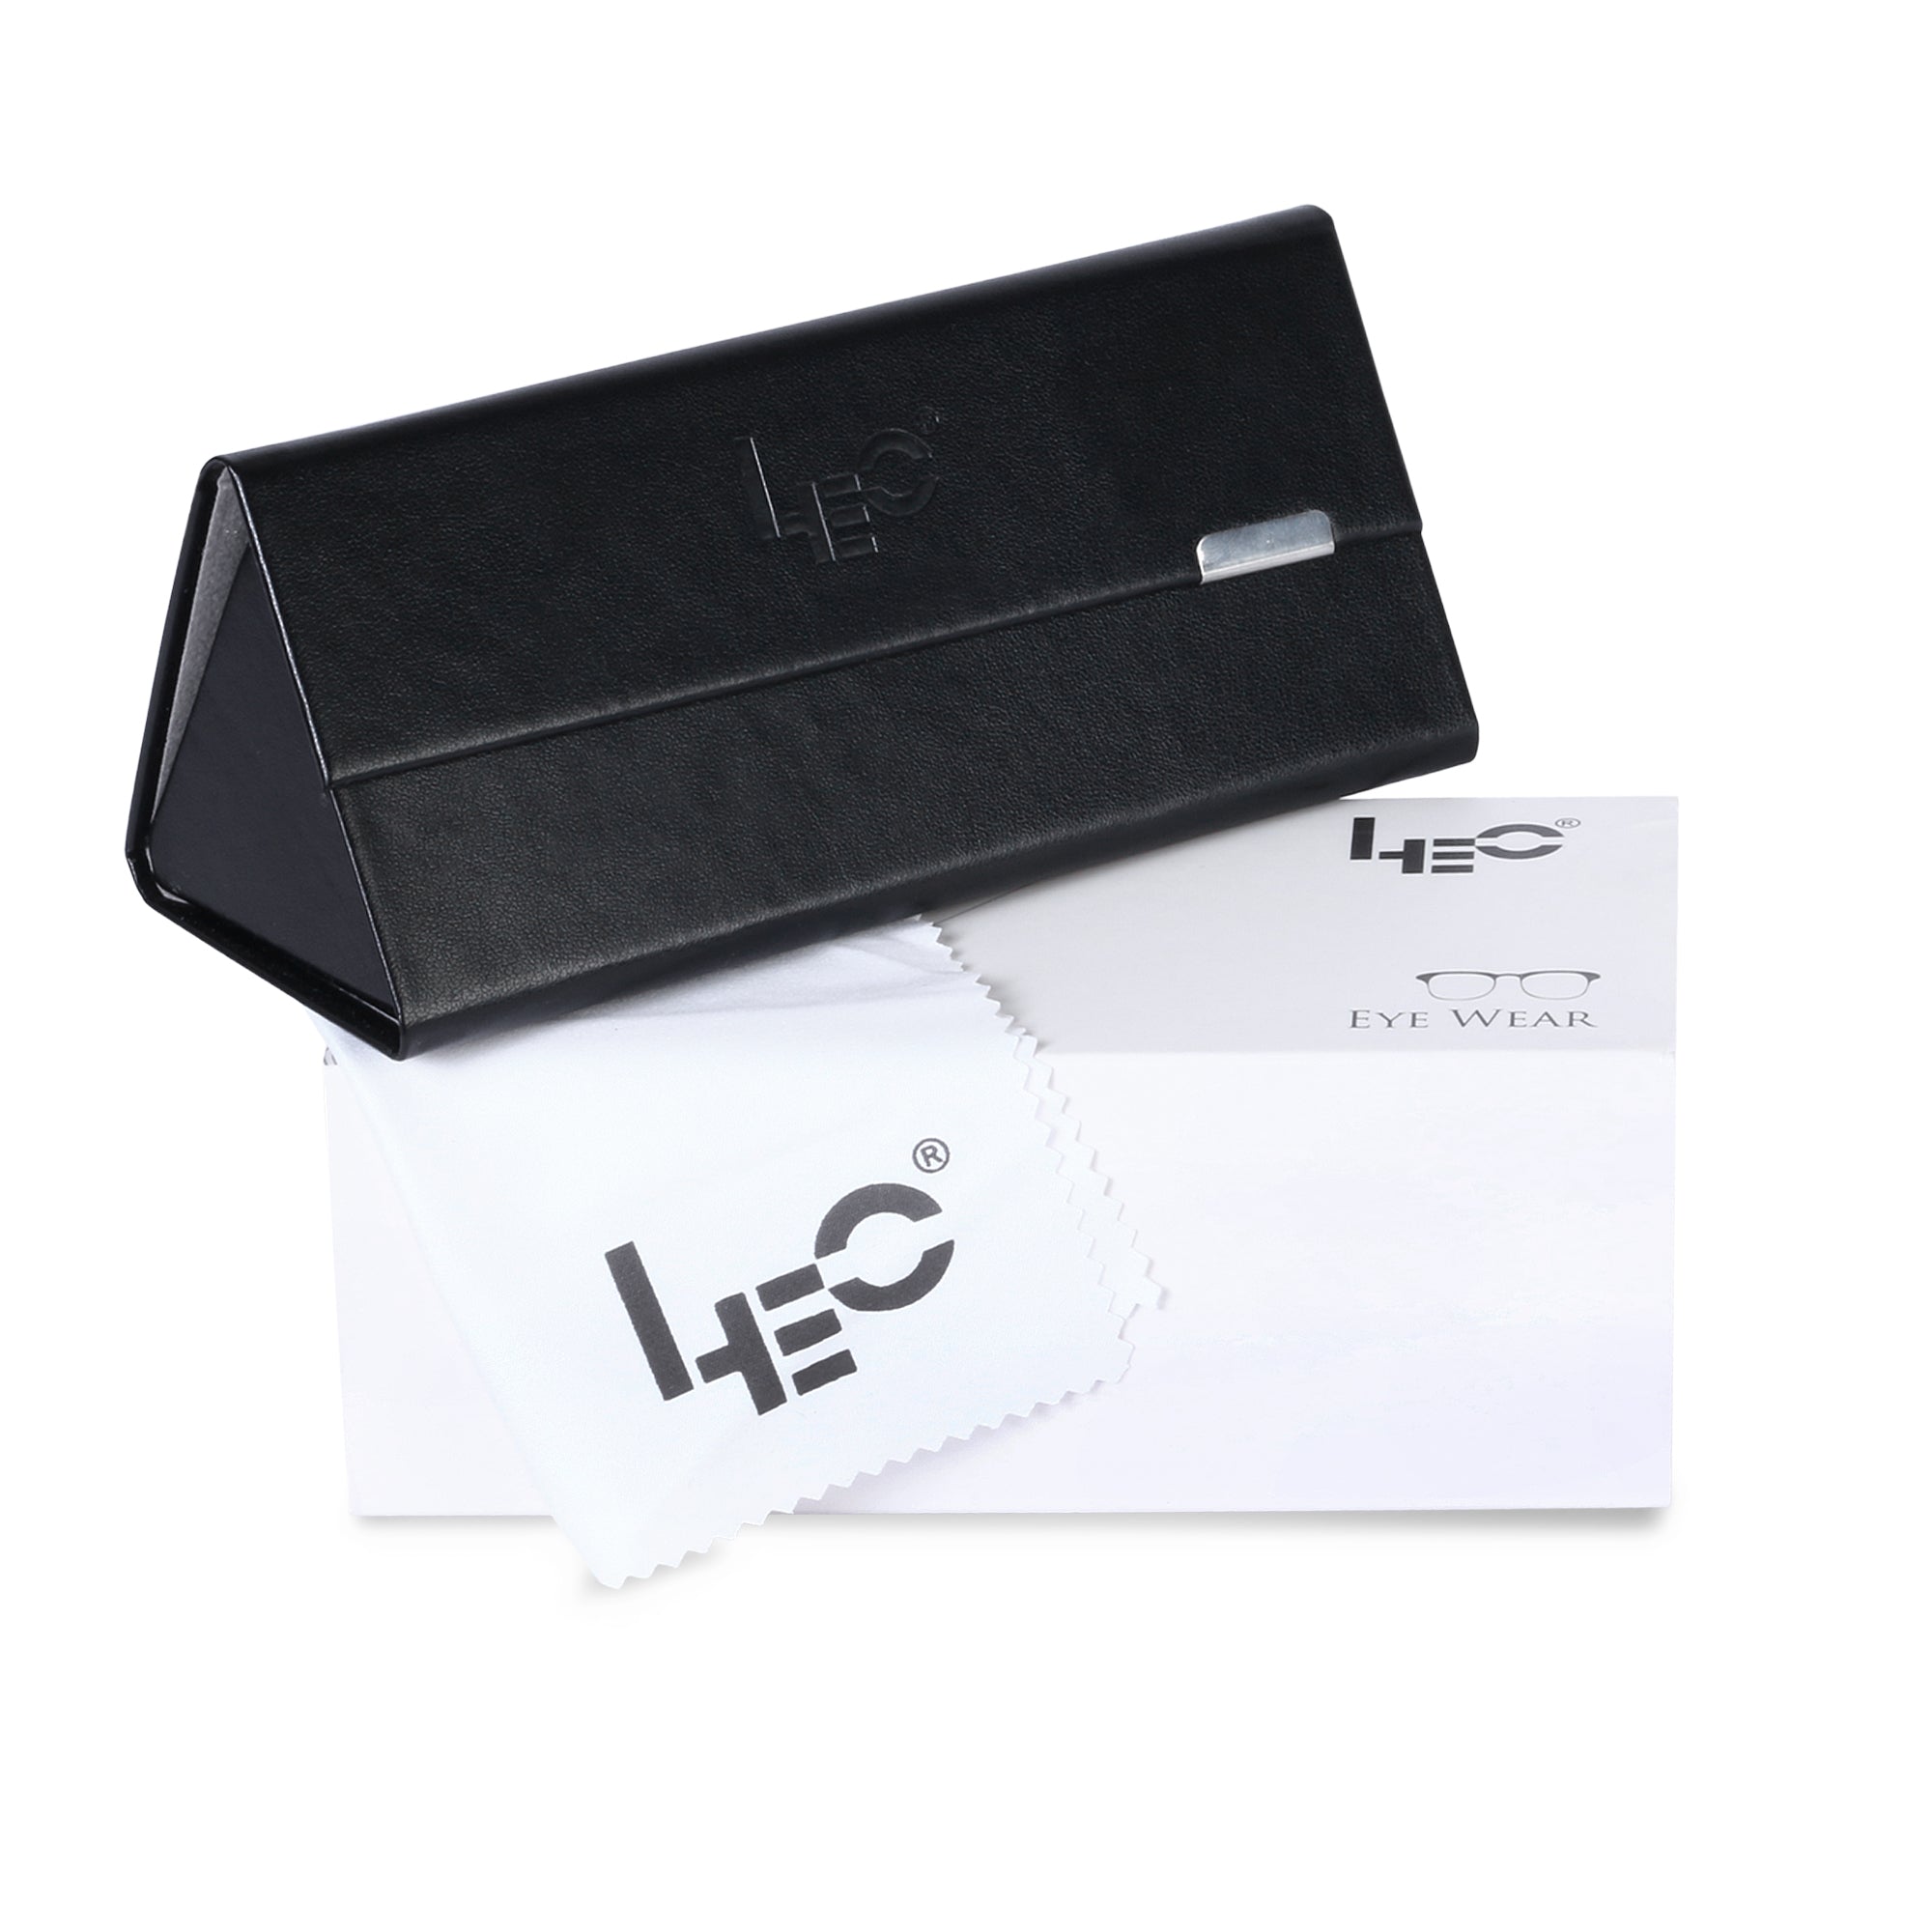 LEO's Study Eyeglasses Square Design and Black Colored - LDB006